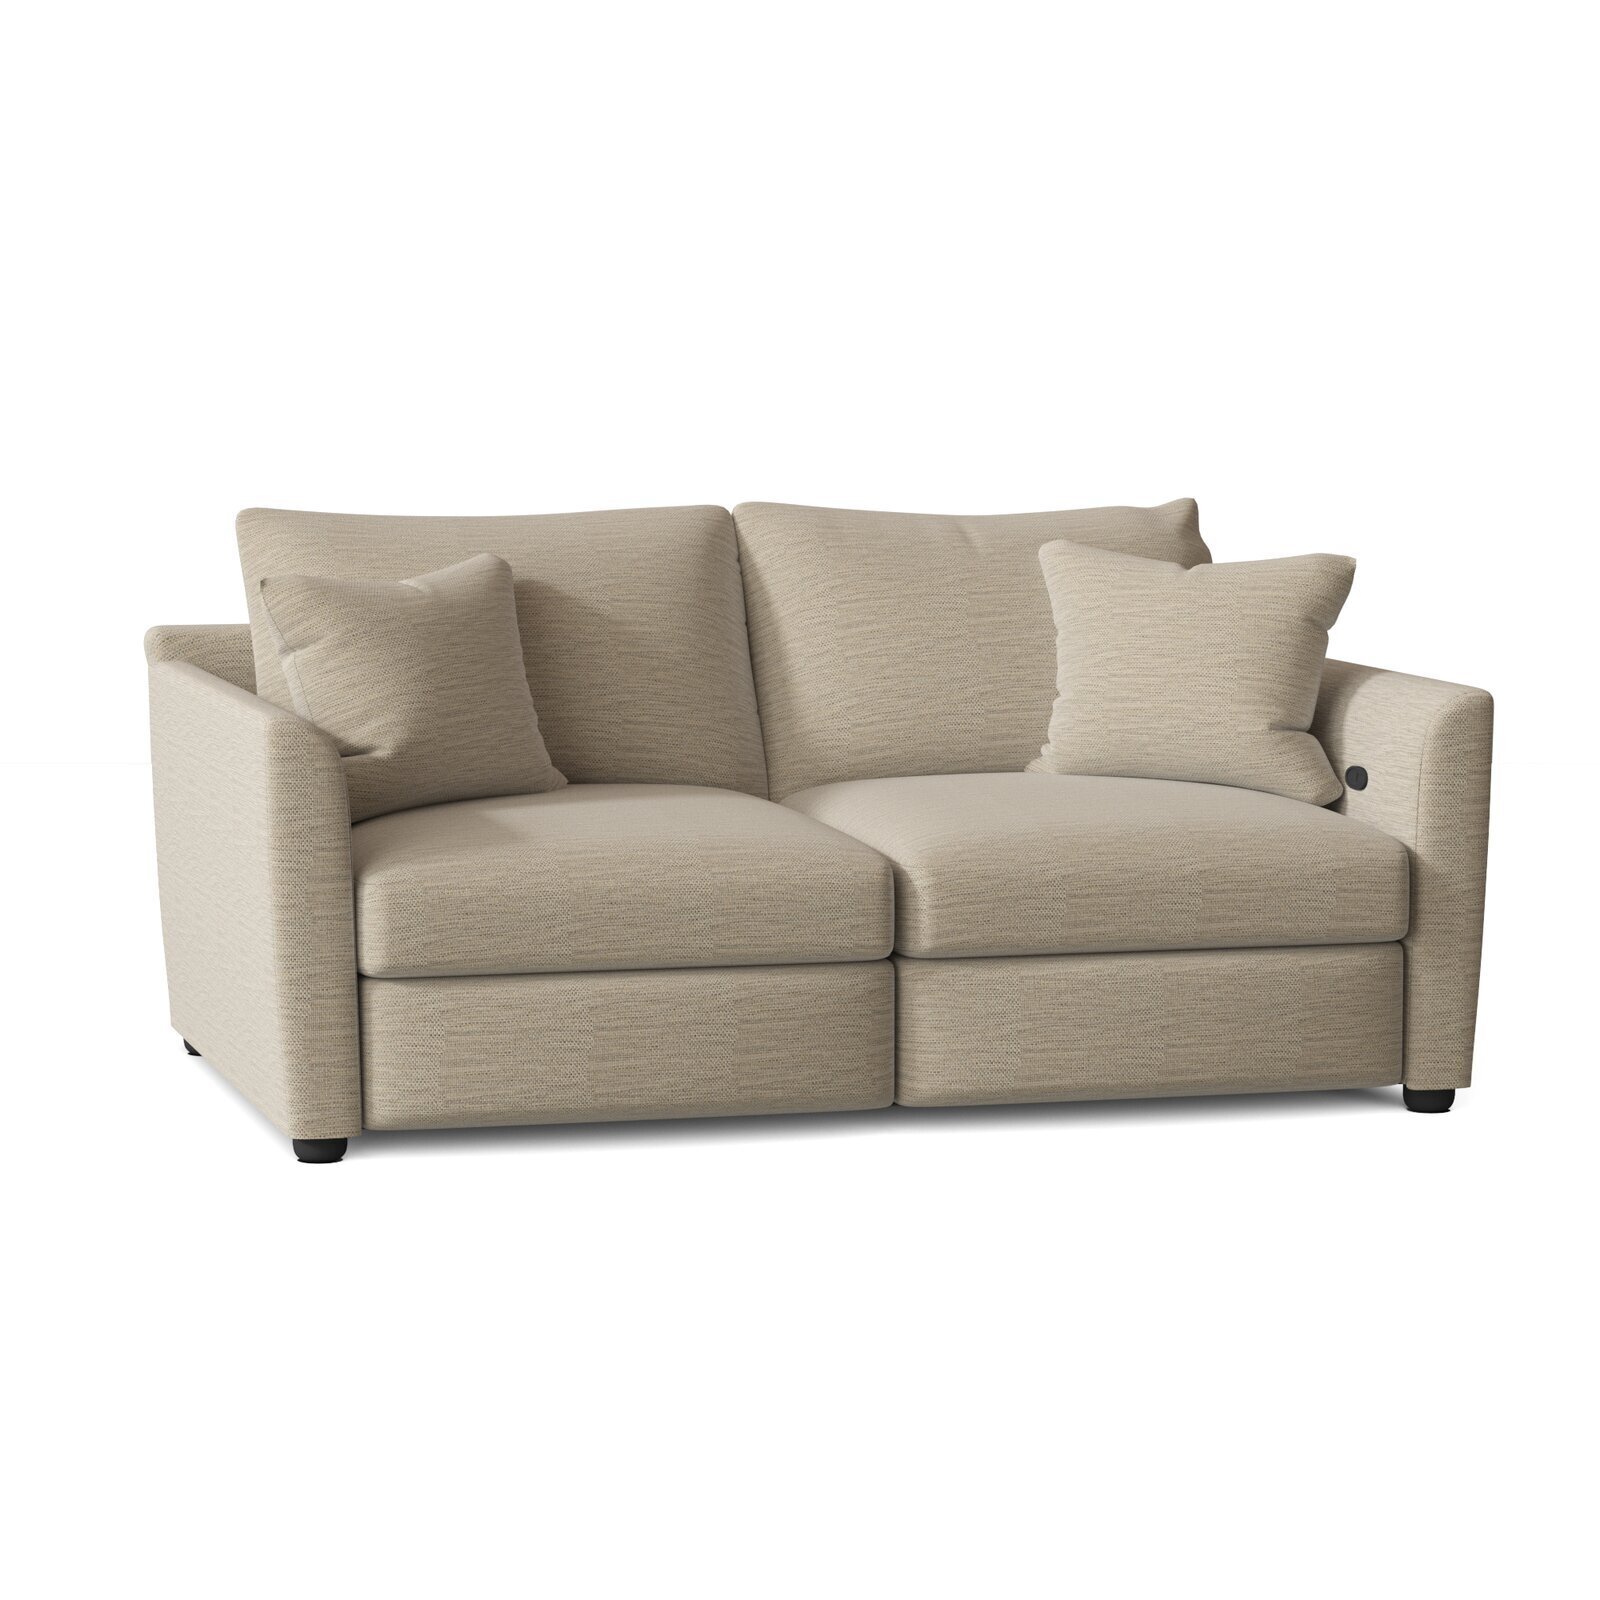 Reversible Contemporary Recliner Sofa